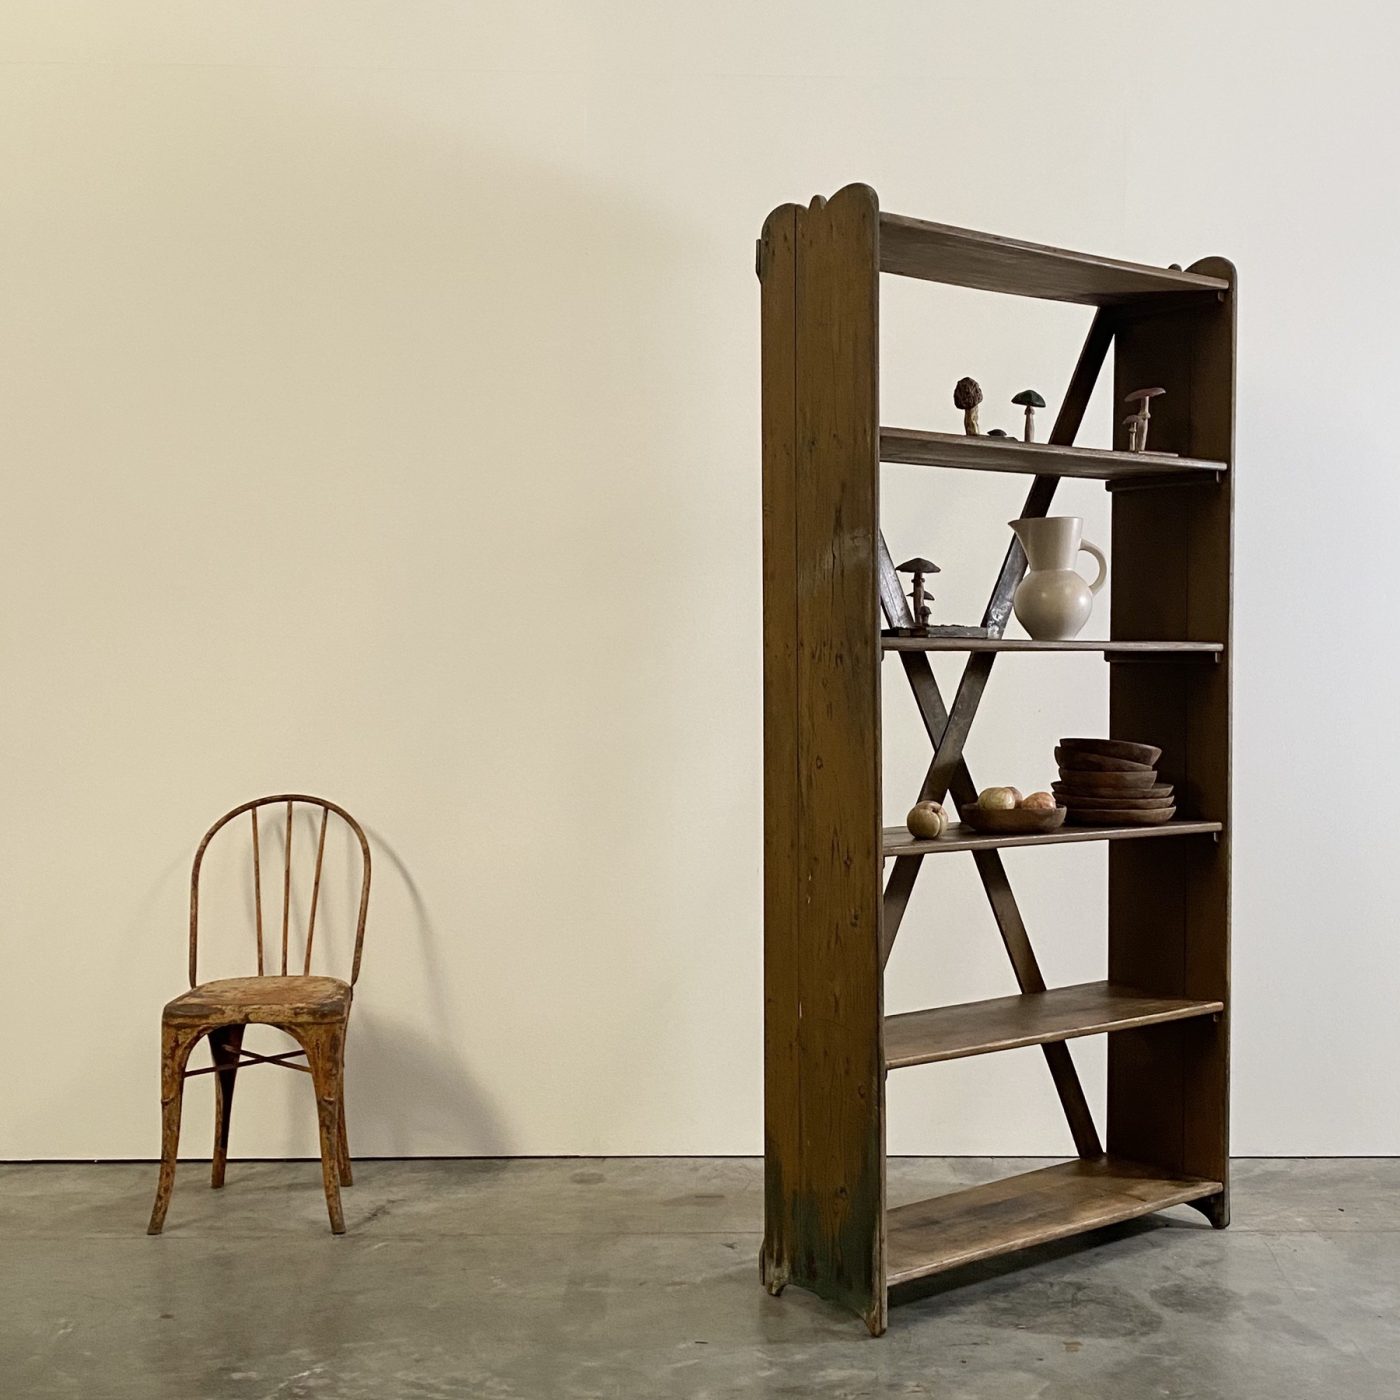 objet-vagabond-wooden-shelf0002